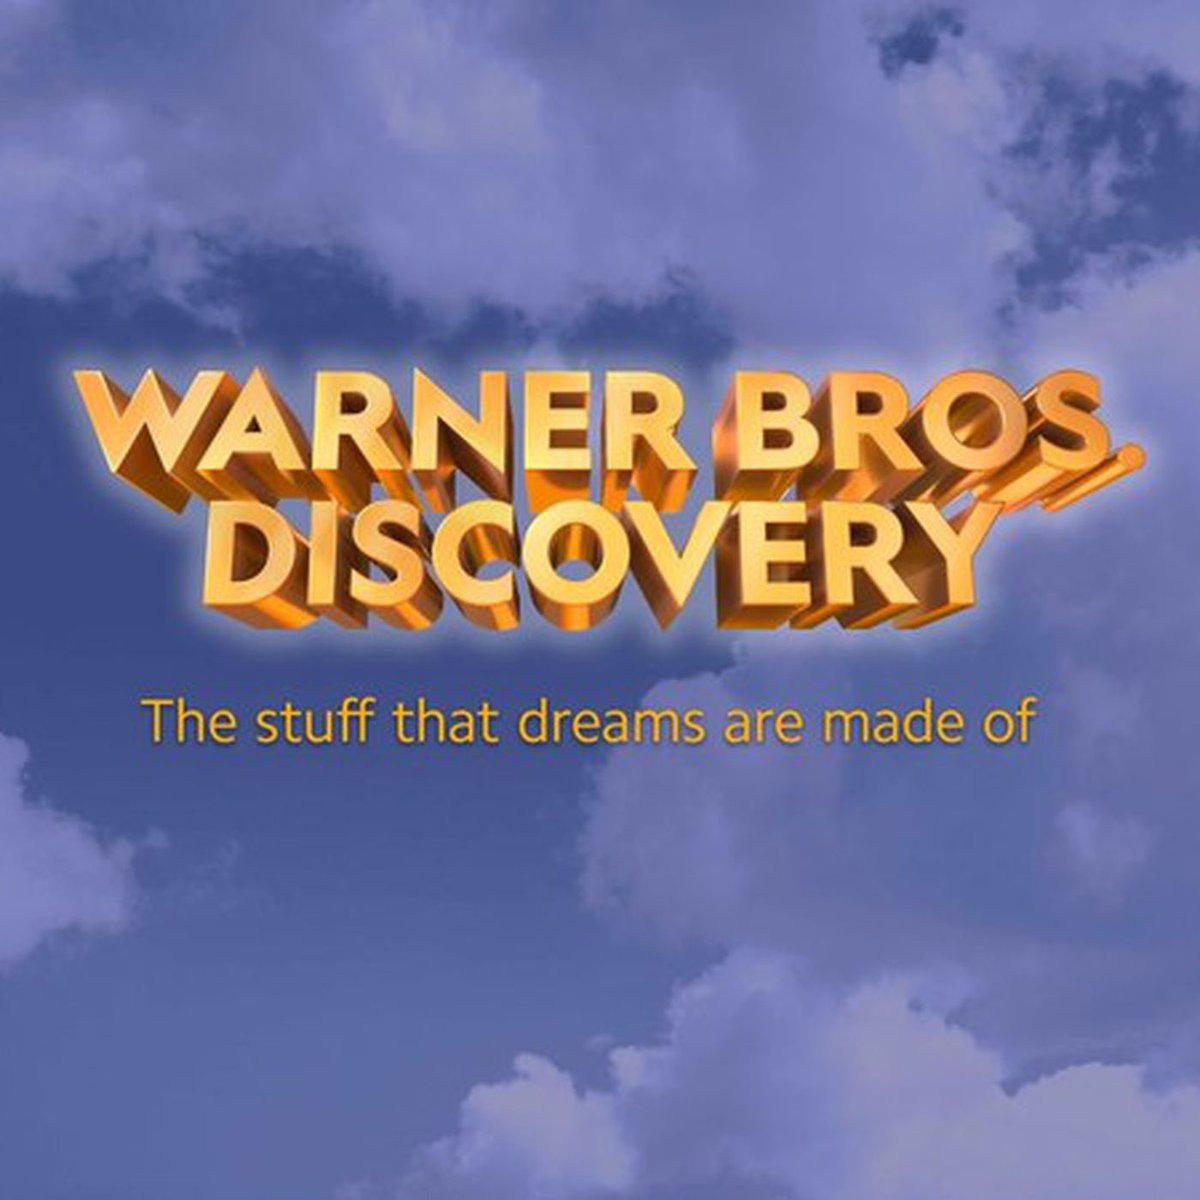 What decisions should Warner Bros. Discovery boss (David Zaslav) undo ↩️?